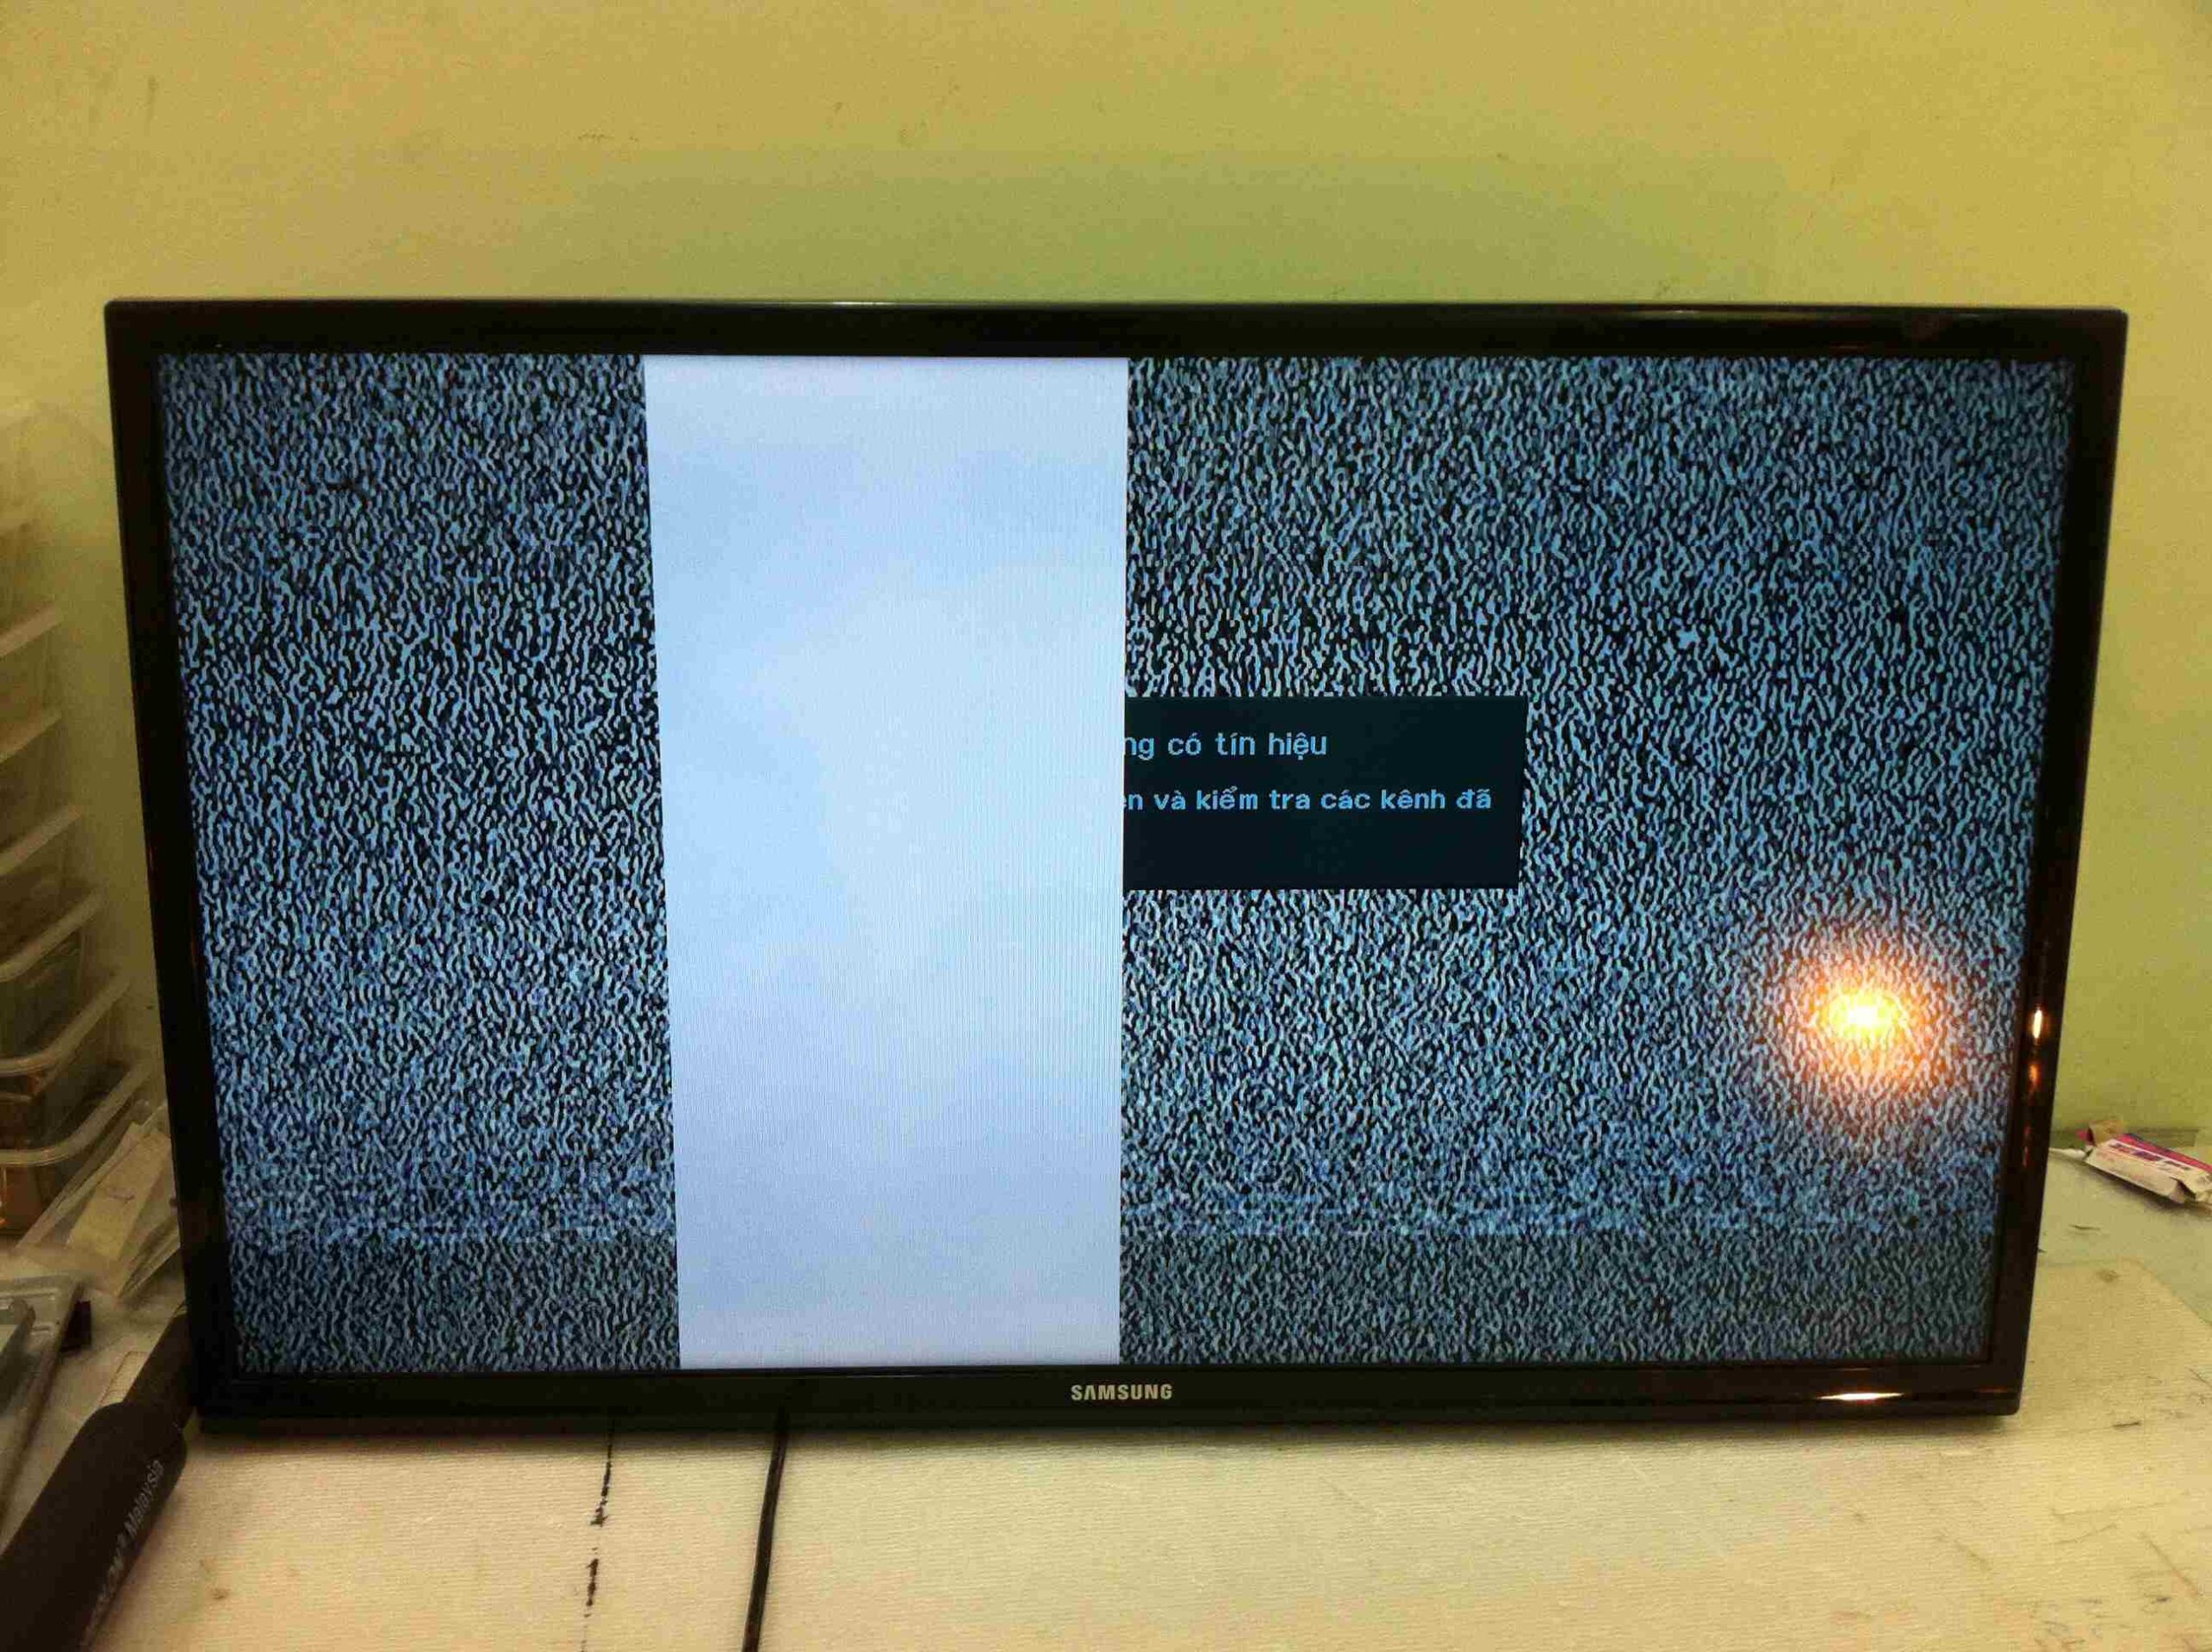 Lỗi thường gặp của tivi Samsung